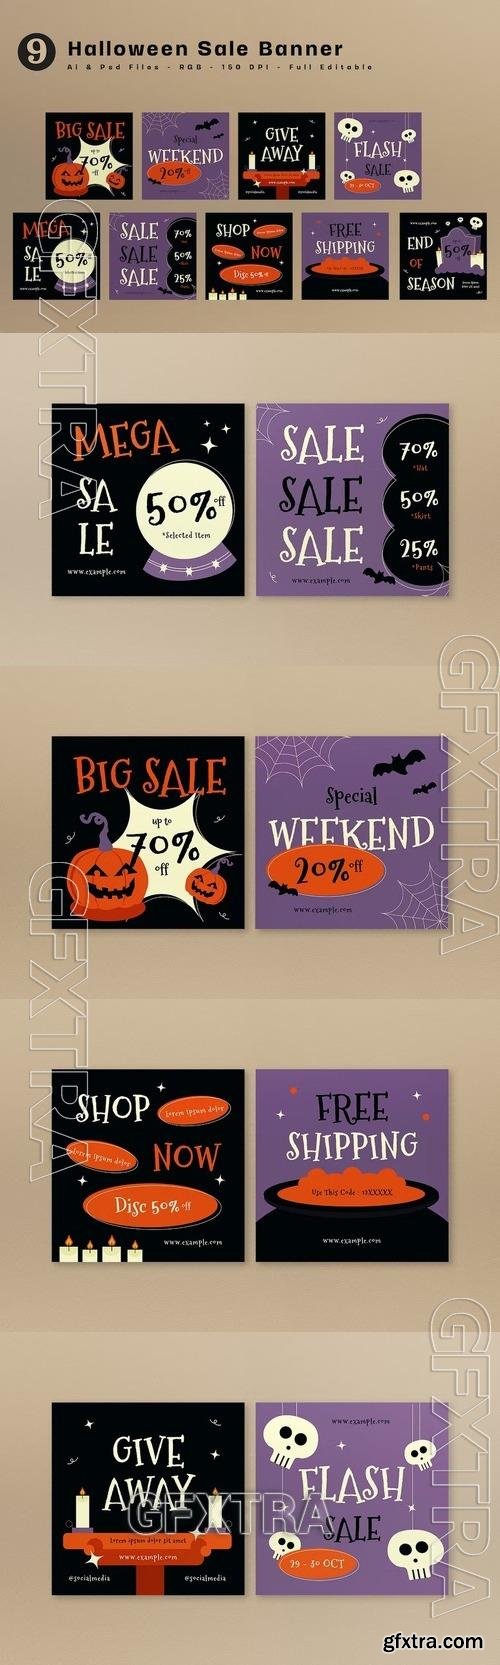 Halloween Sale Banner XJMAJY9